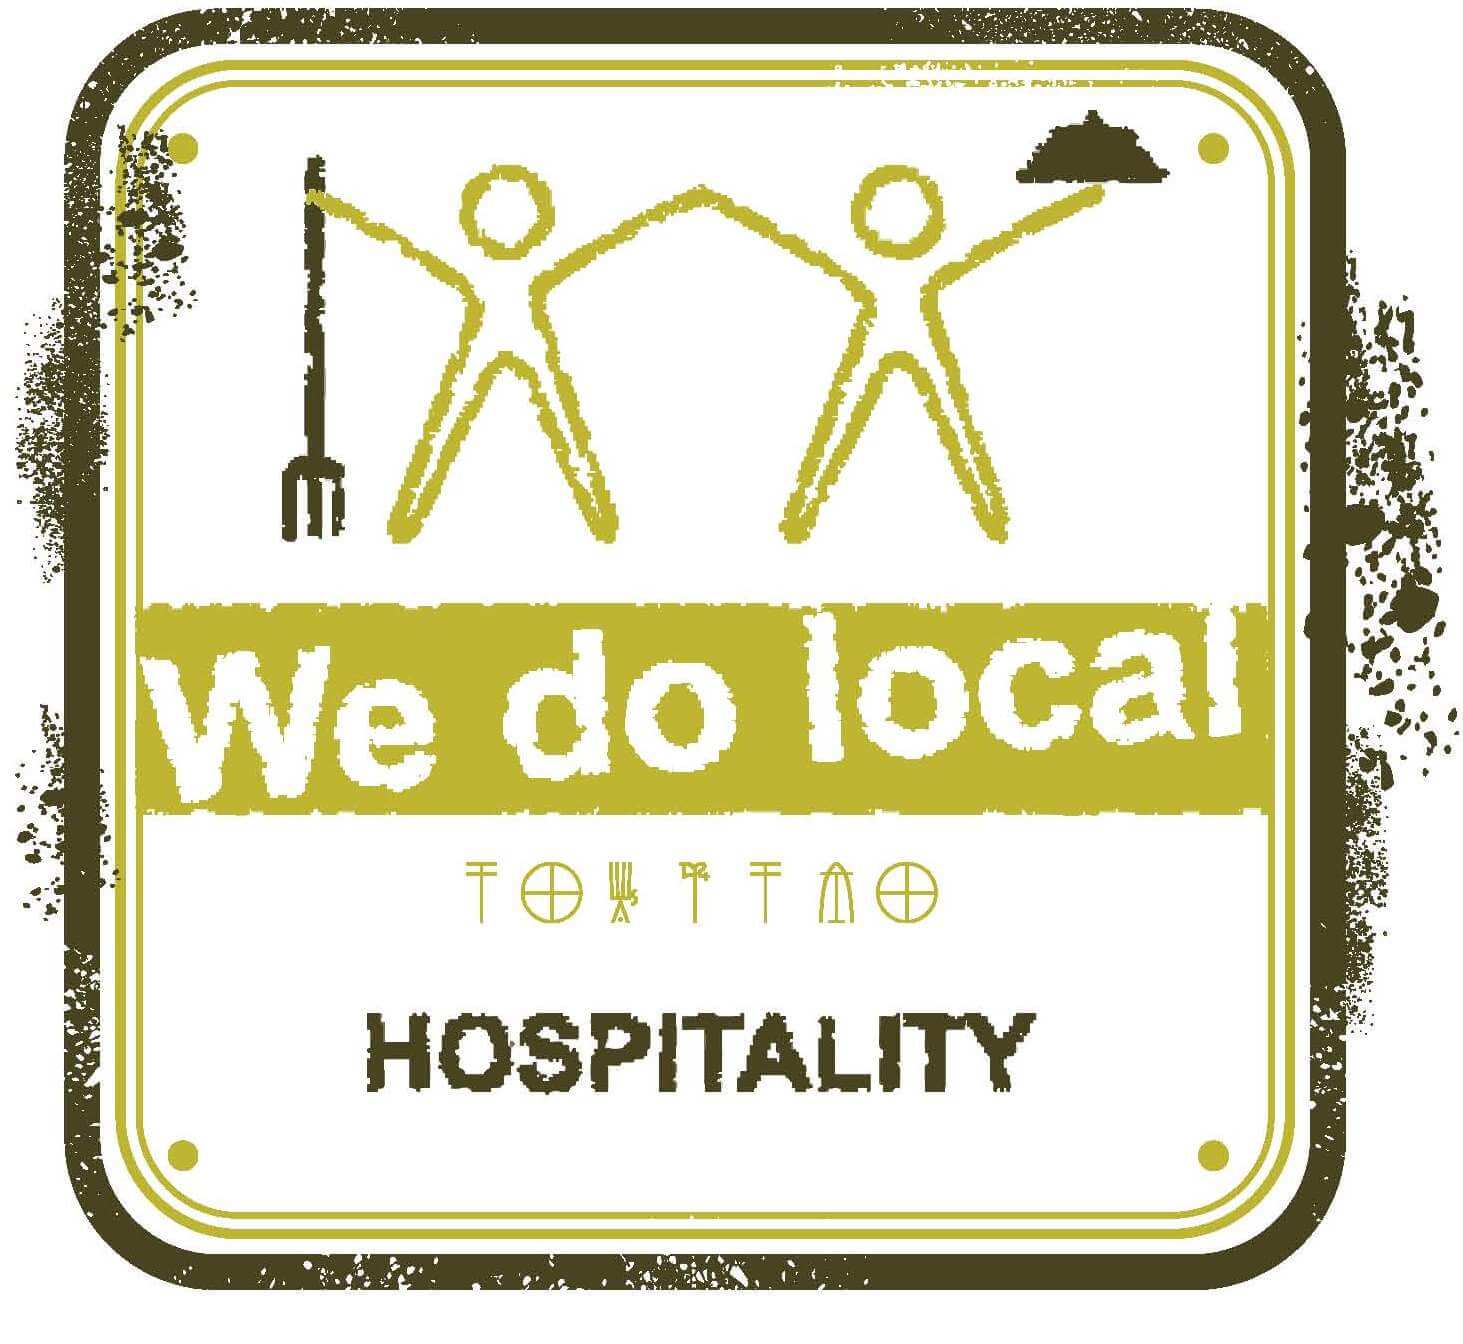 «We do local»